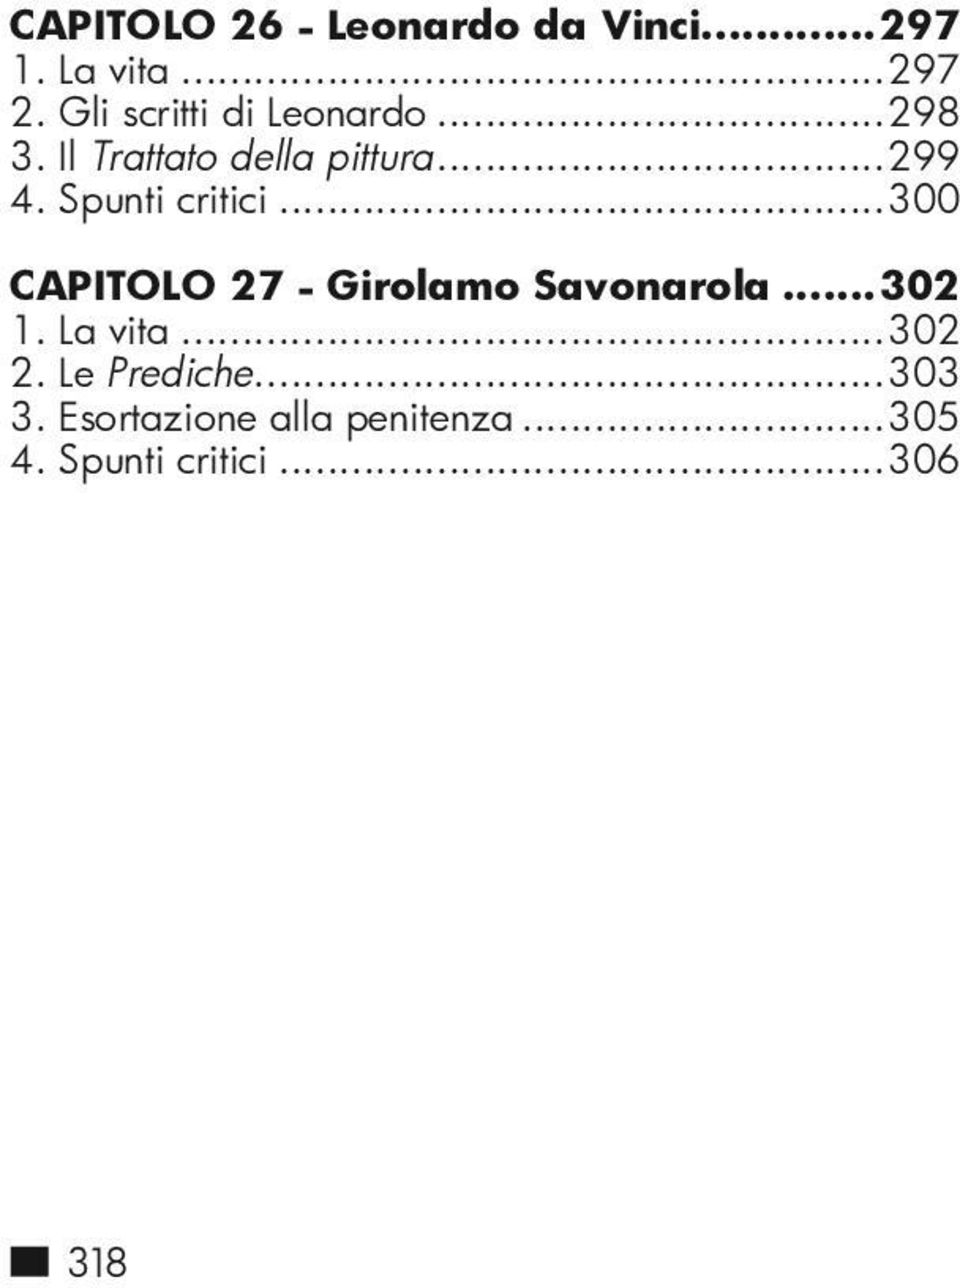 Spunti critici...300 Capitolo 27 - Girolamo Savonarola...302 1. La vita.